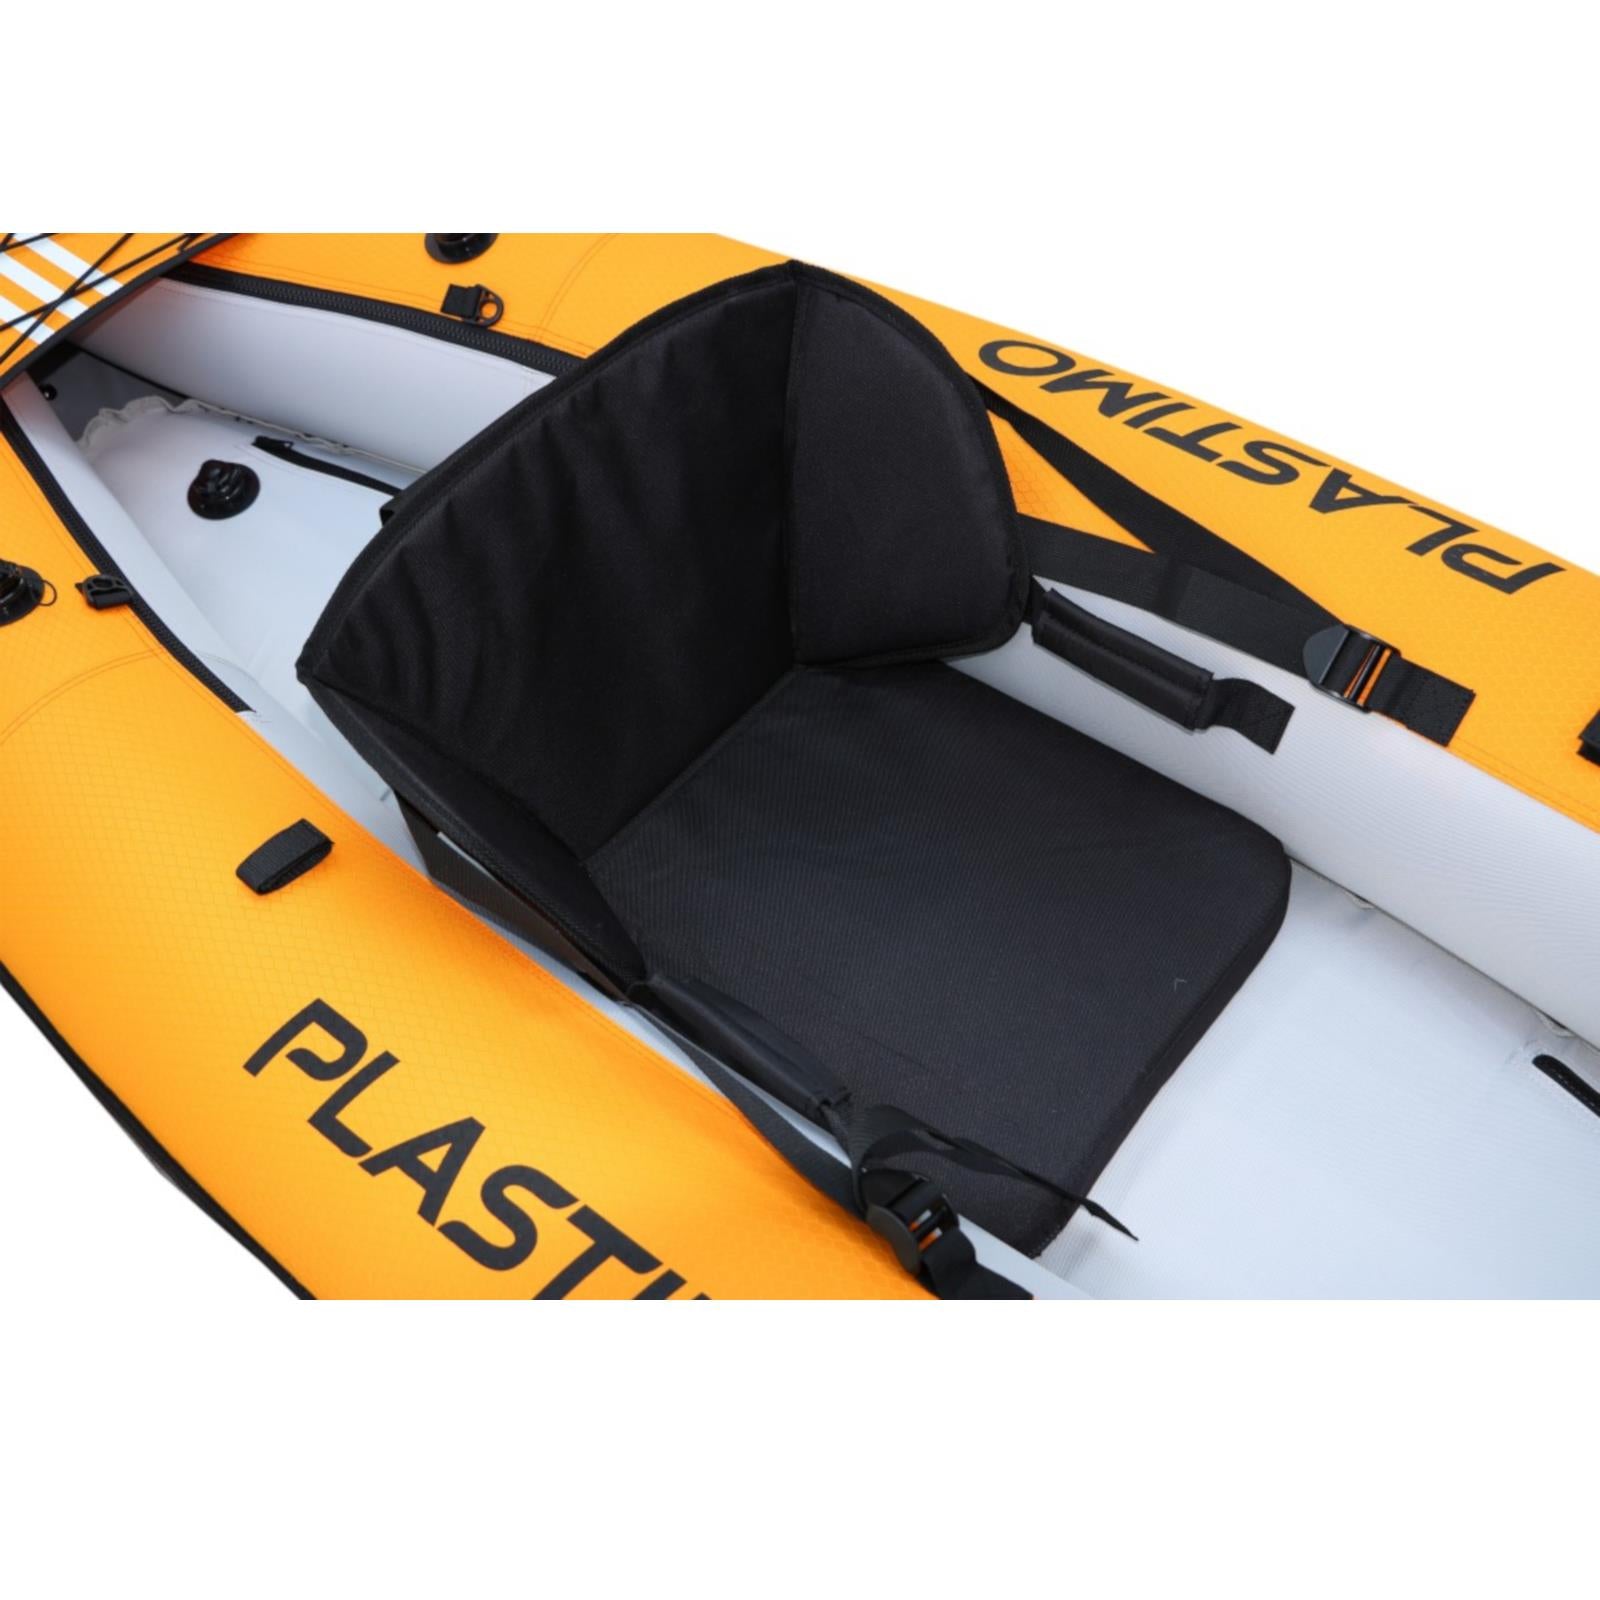 Plastimo Inflatable Sea & River Kayak Canoe Single 2.7m V-Type with Paddle Oar